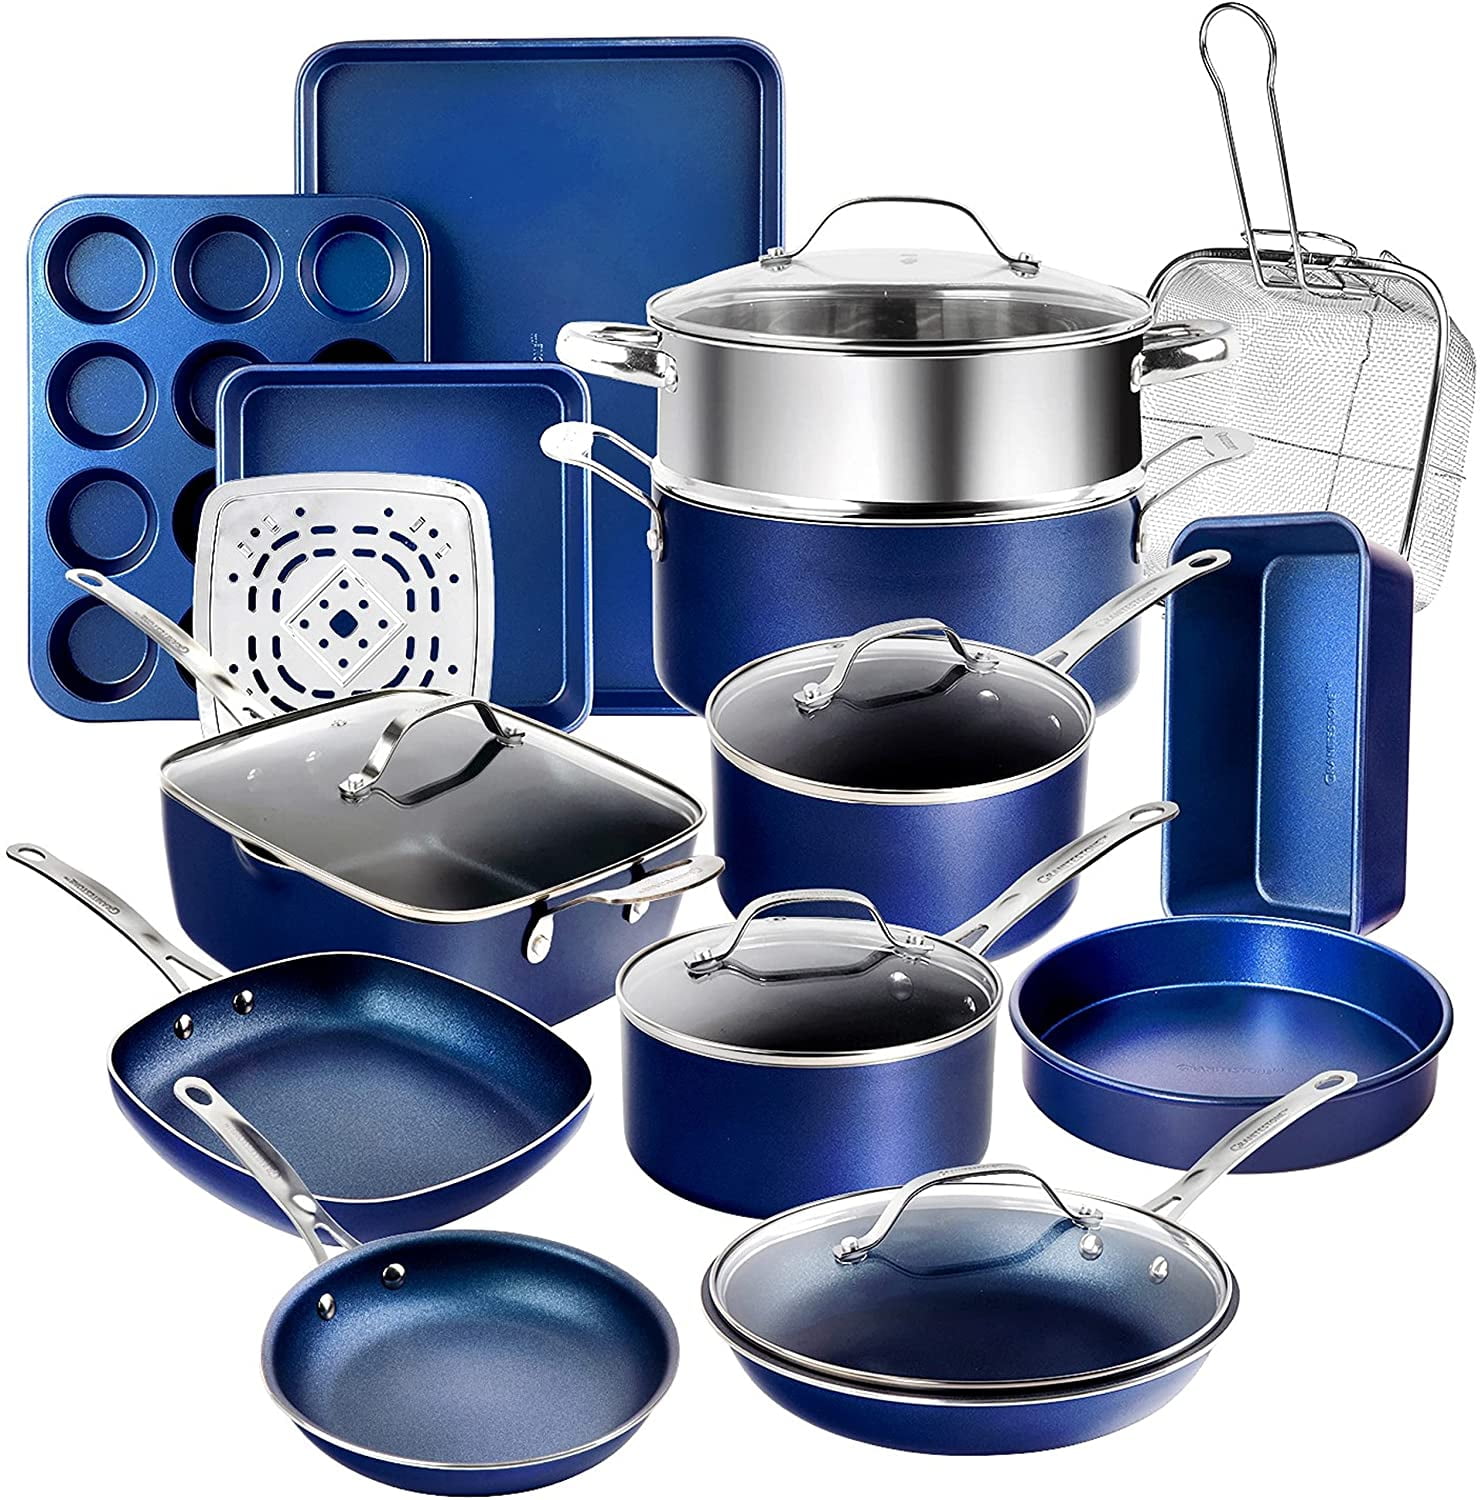  Granitestone Blue 15 Piece Nonstick Cookware Set - Pots, Pans,  Lids and Bakeware - Diamond Coated, Dishwasher Safe: Home & Kitchen